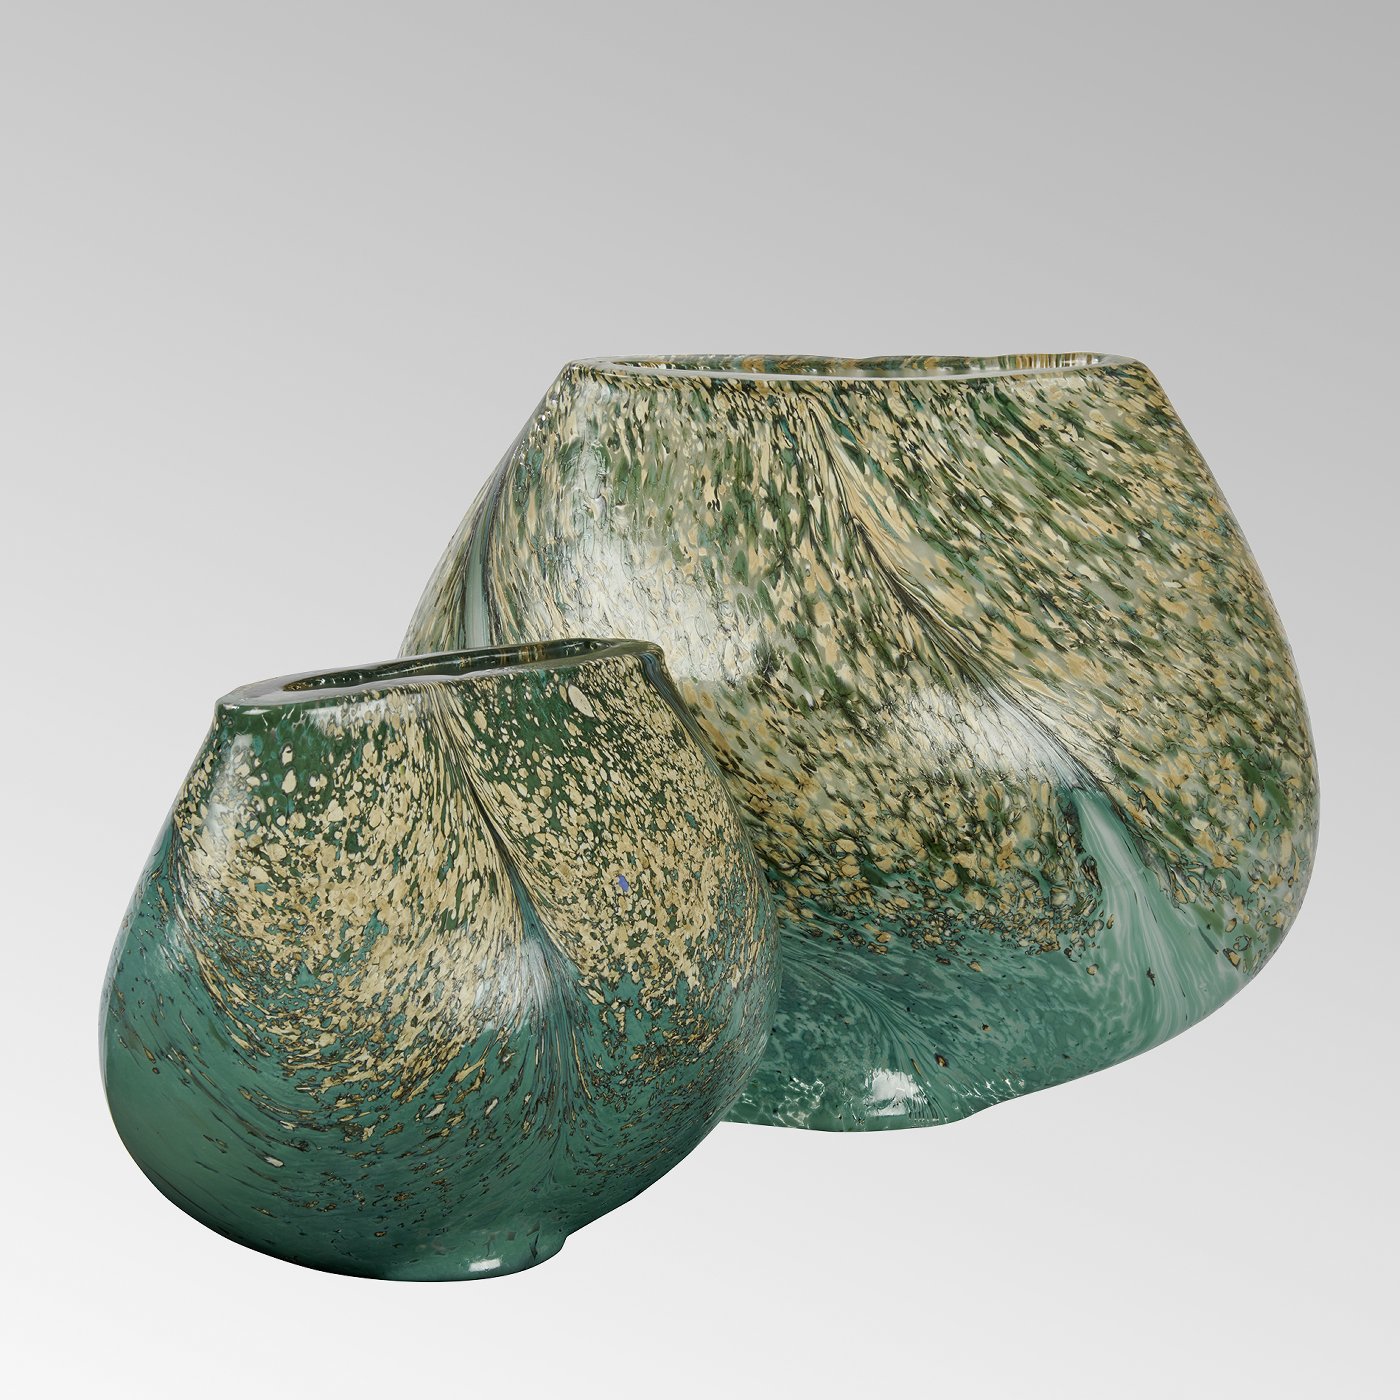 Tizian glass vase